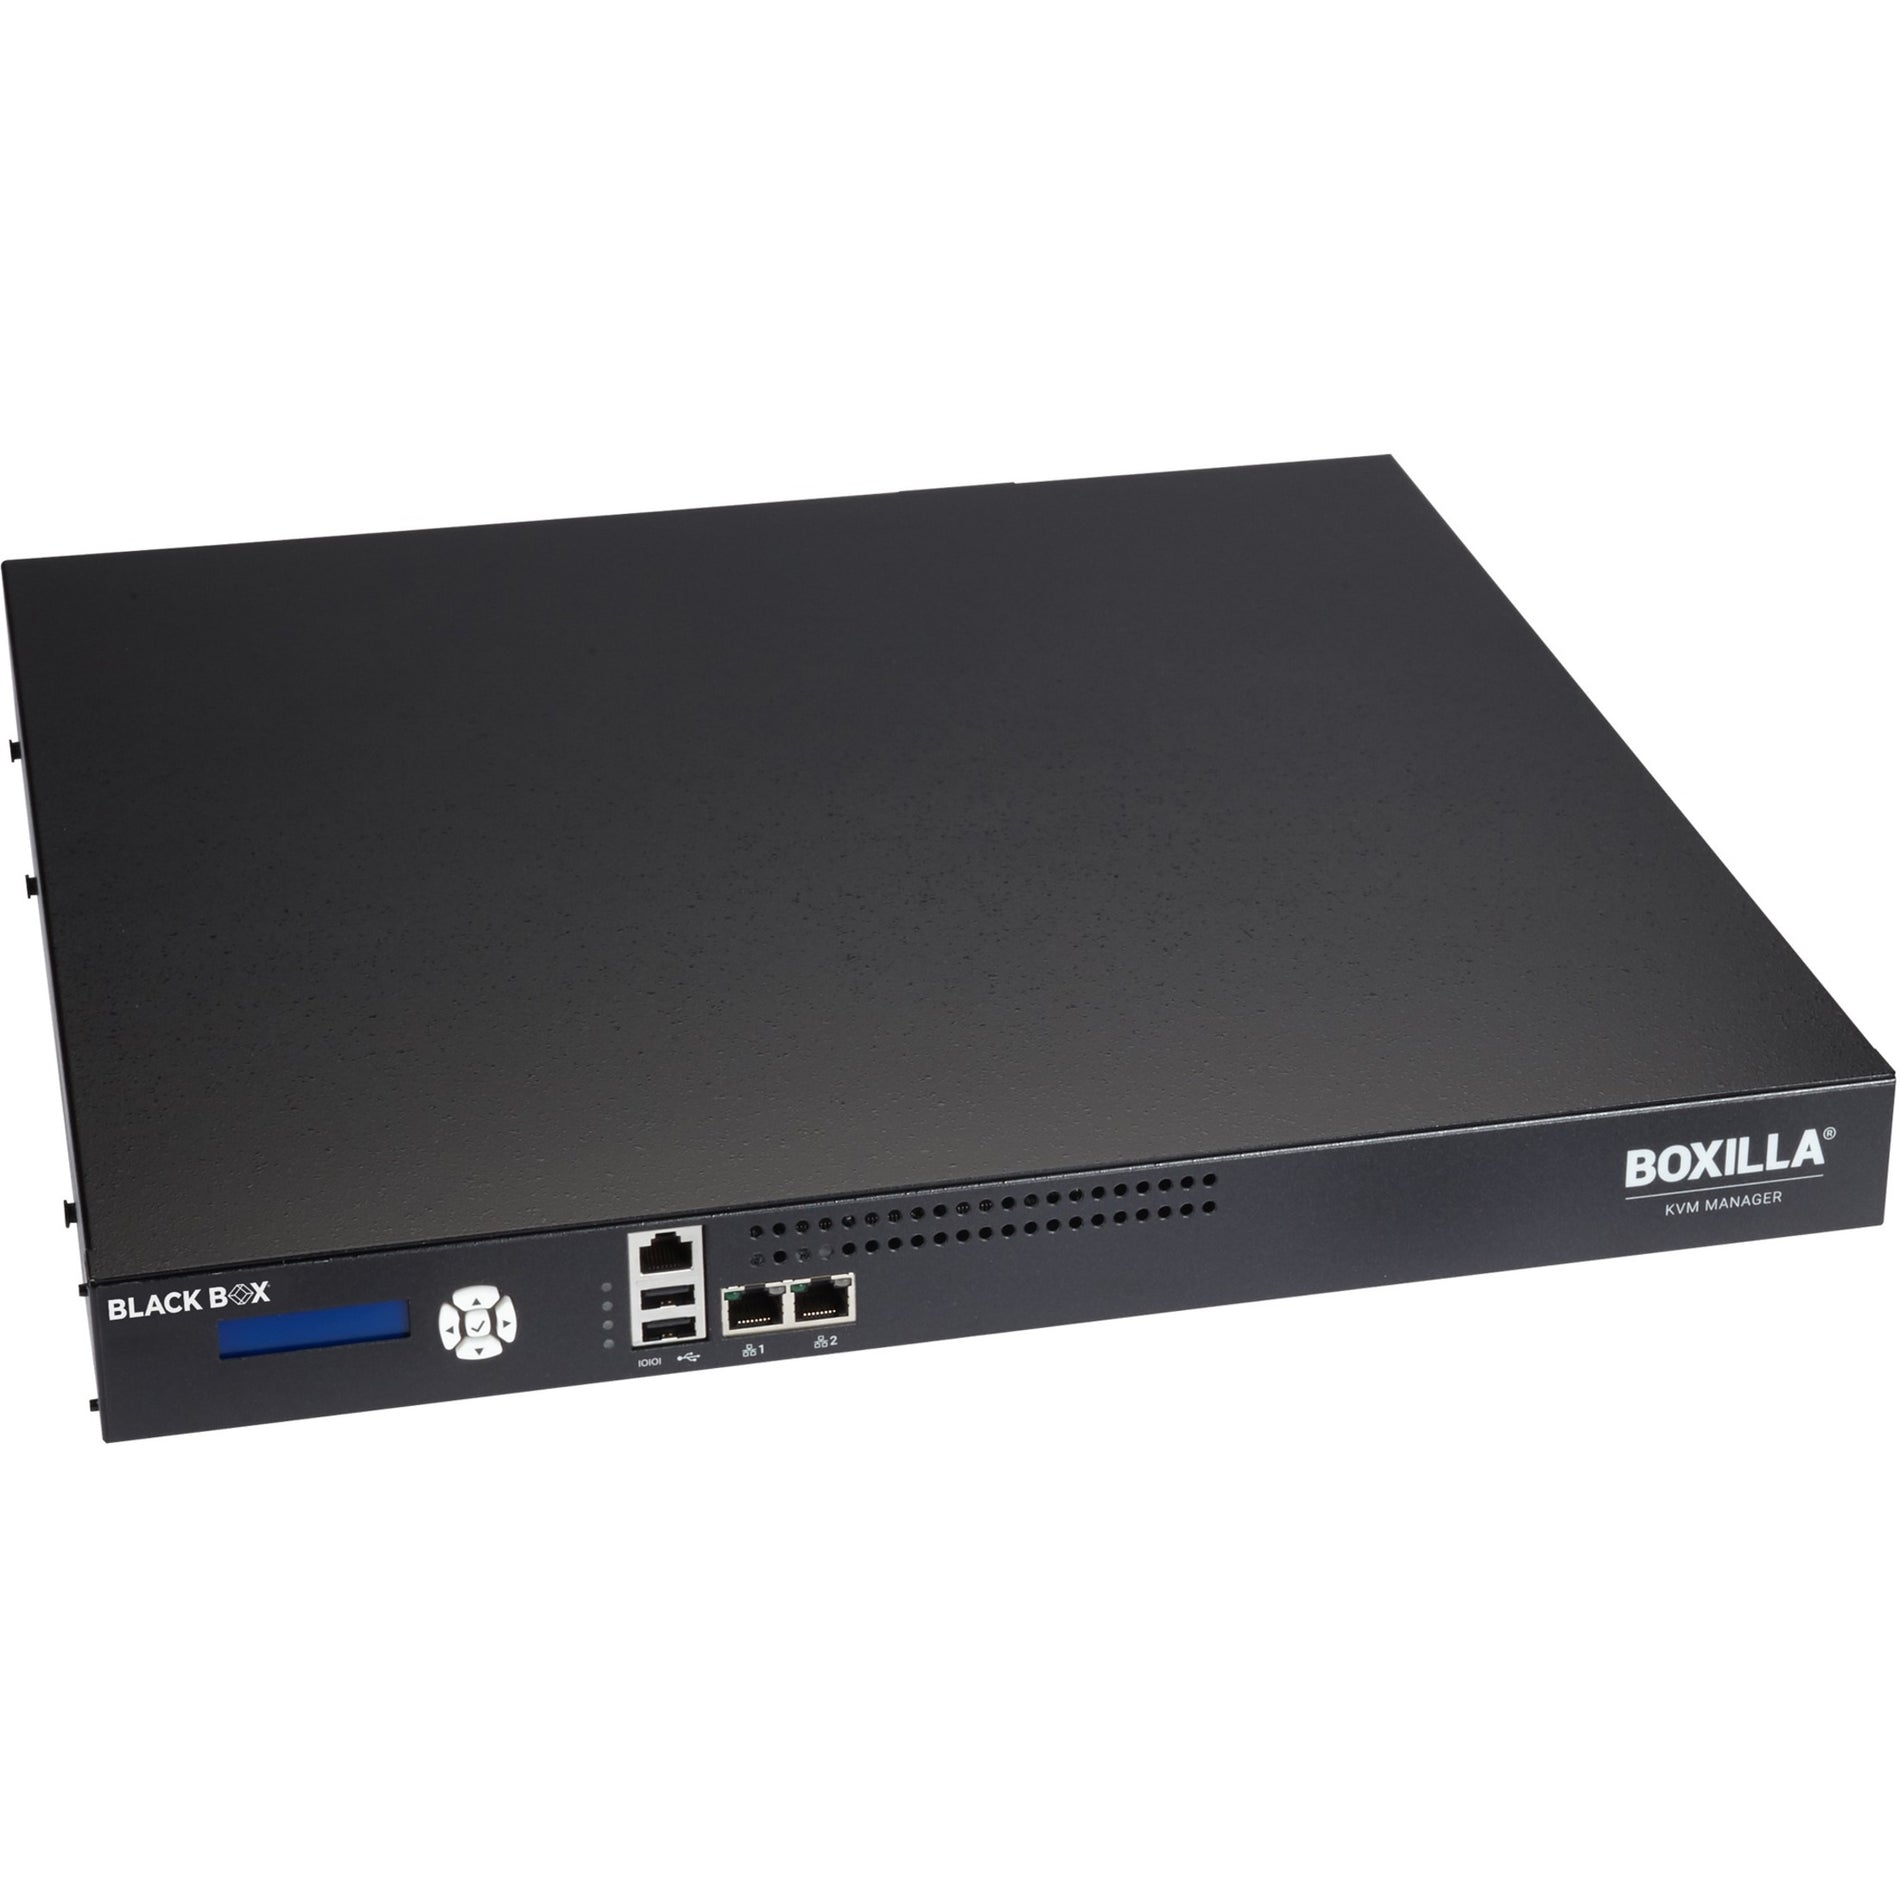 Black Box BXAMGR-R2 Boxilla KVM Manager with 25-Device License, USB 2.0, 2 USB Ports, 3 Network (RJ-45) Ports